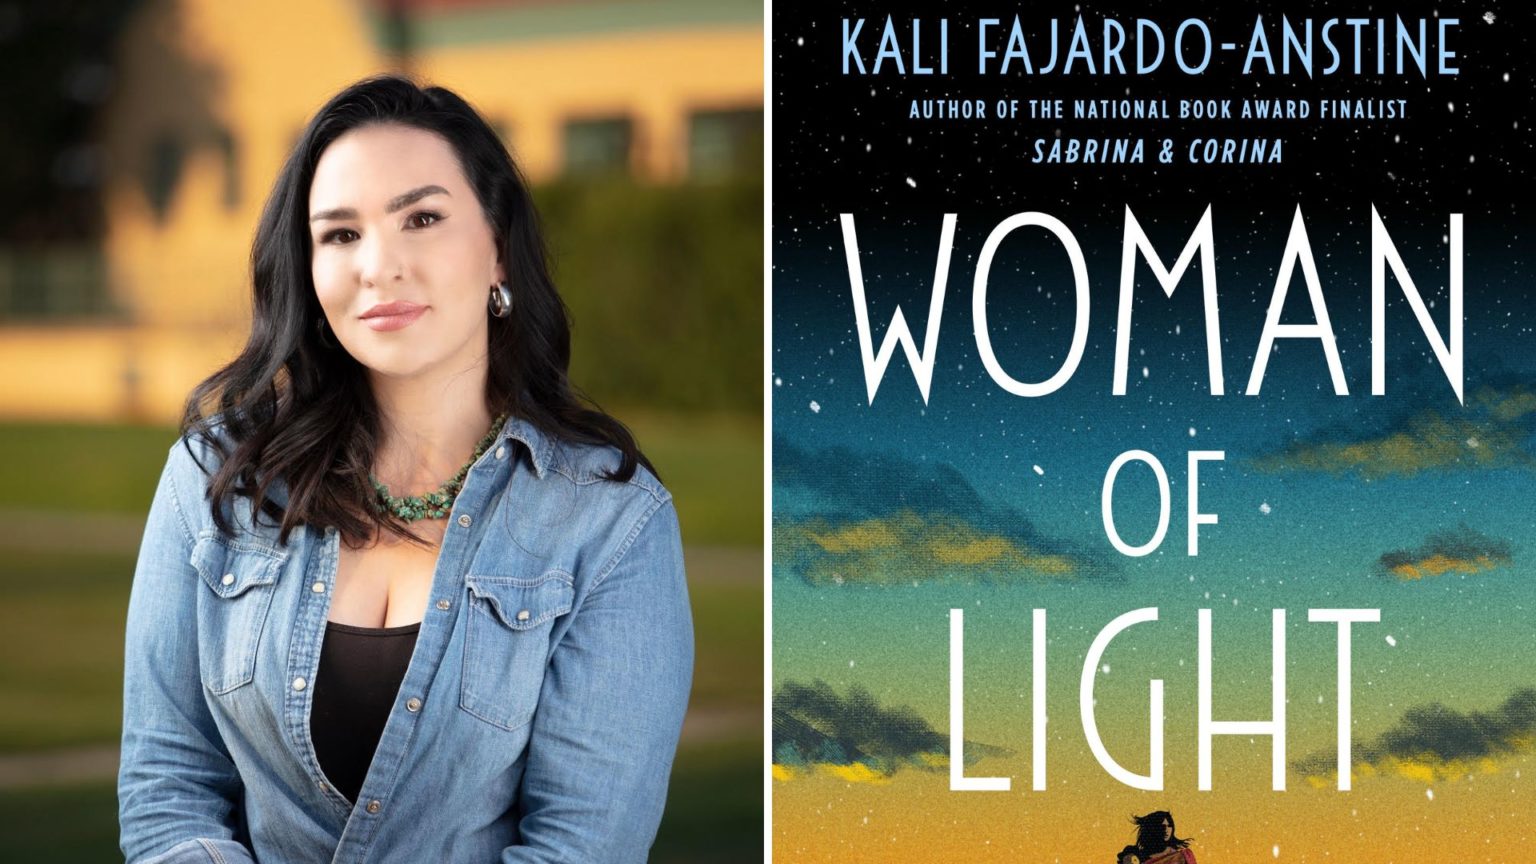 woman of light by kali fajardo anstine